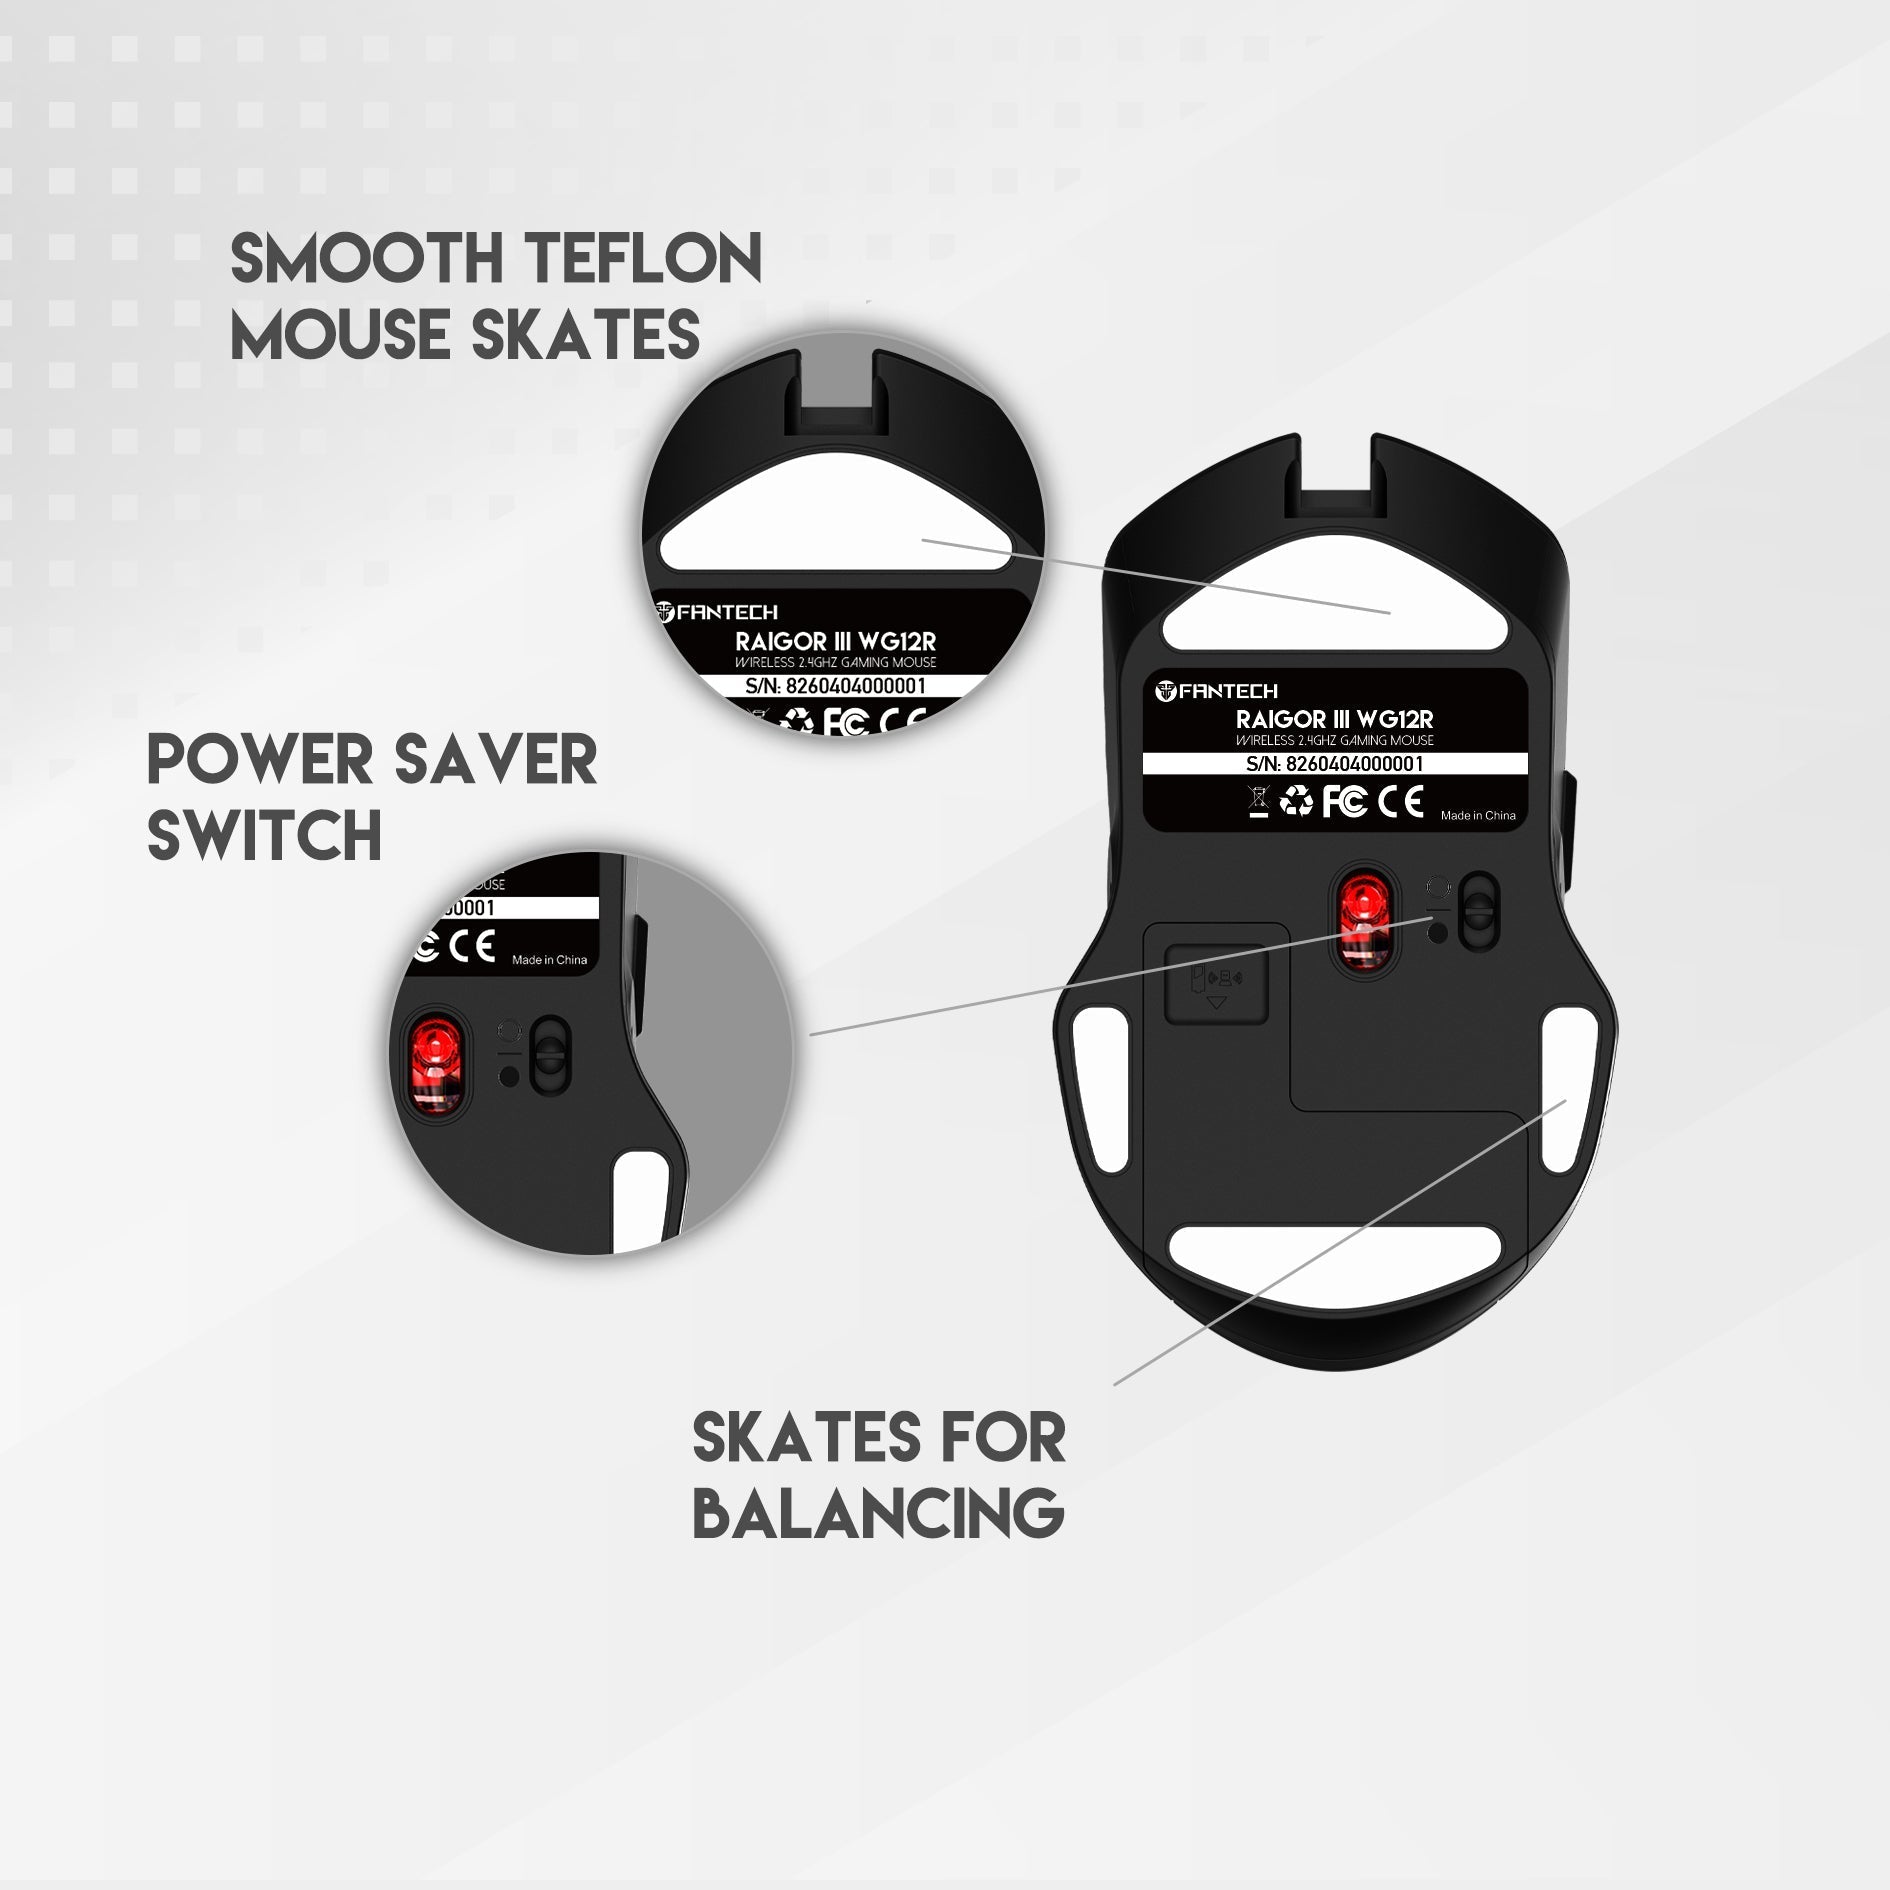 Fantech RAIGOR Gen III WG12R Rechargeable Mouse Wireless Gaming - Fantech Jordan | Gaming Accessories Store 